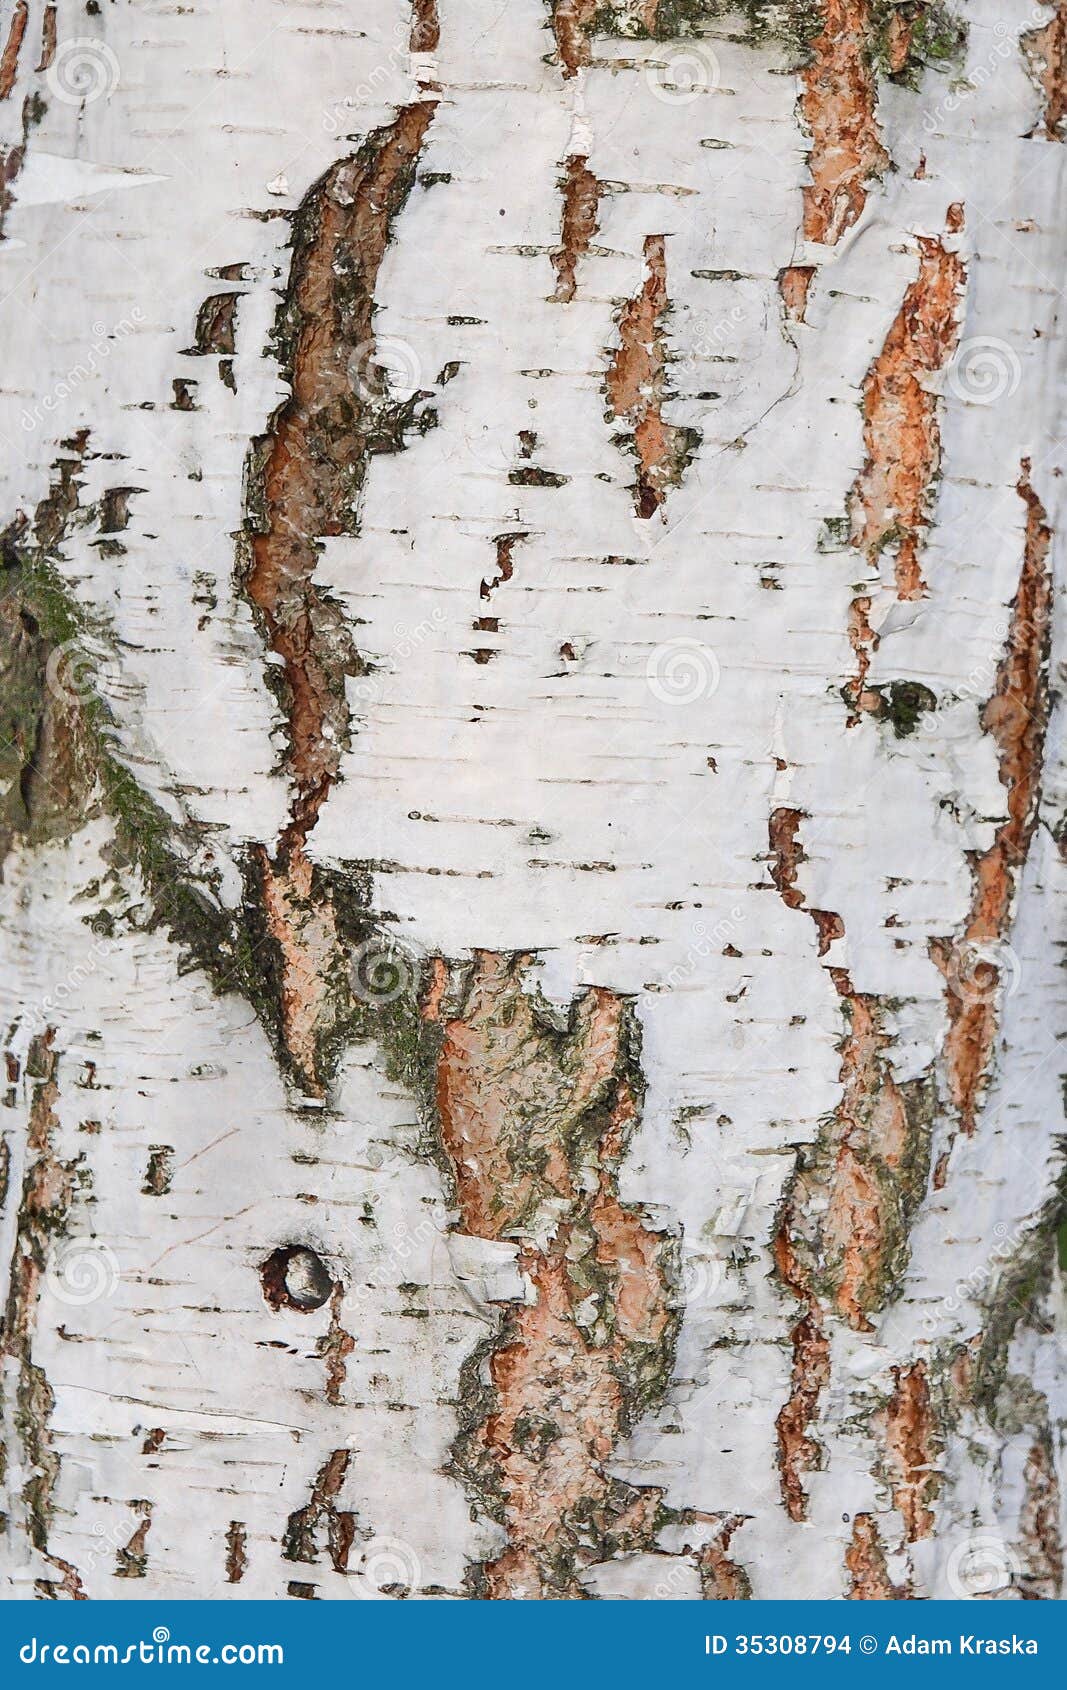 background of the cortex tree birch wood